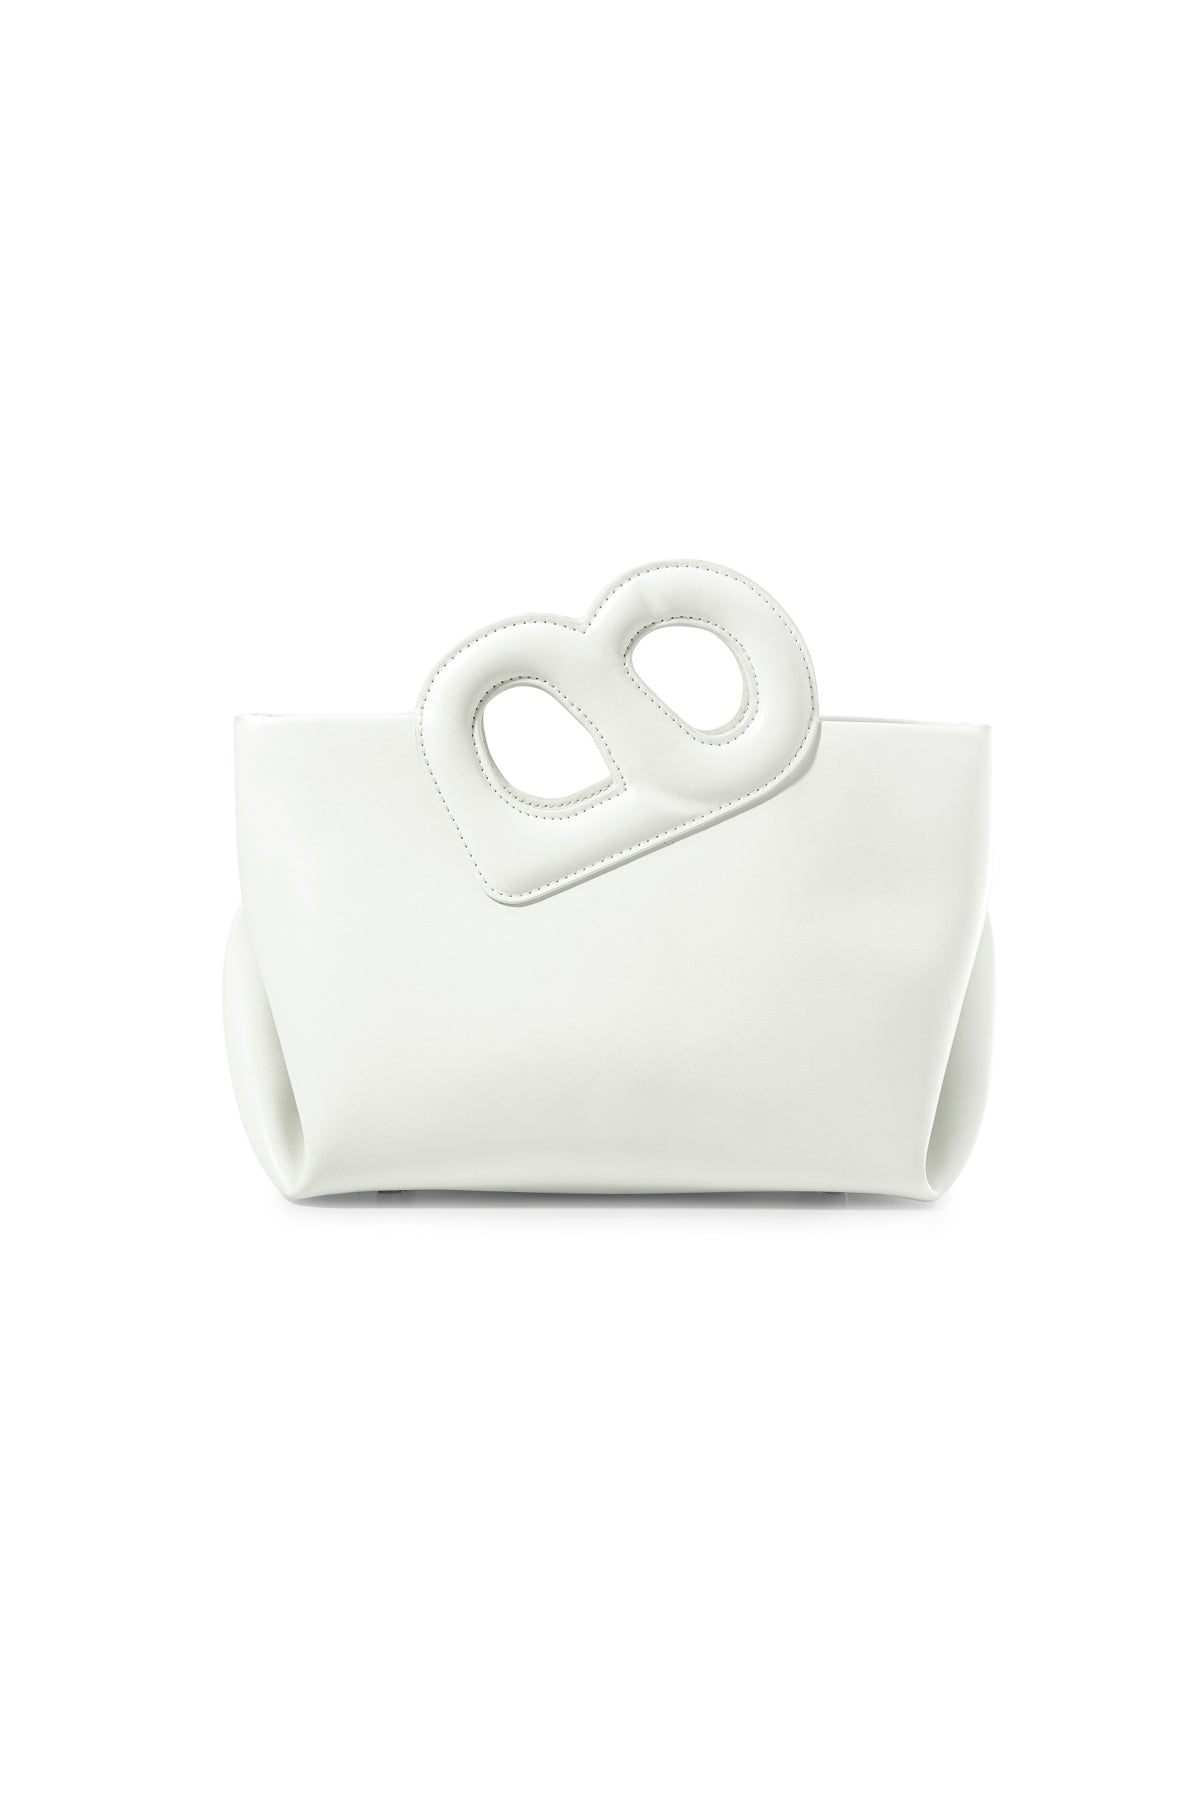 Nina Bag Medium - Cotton